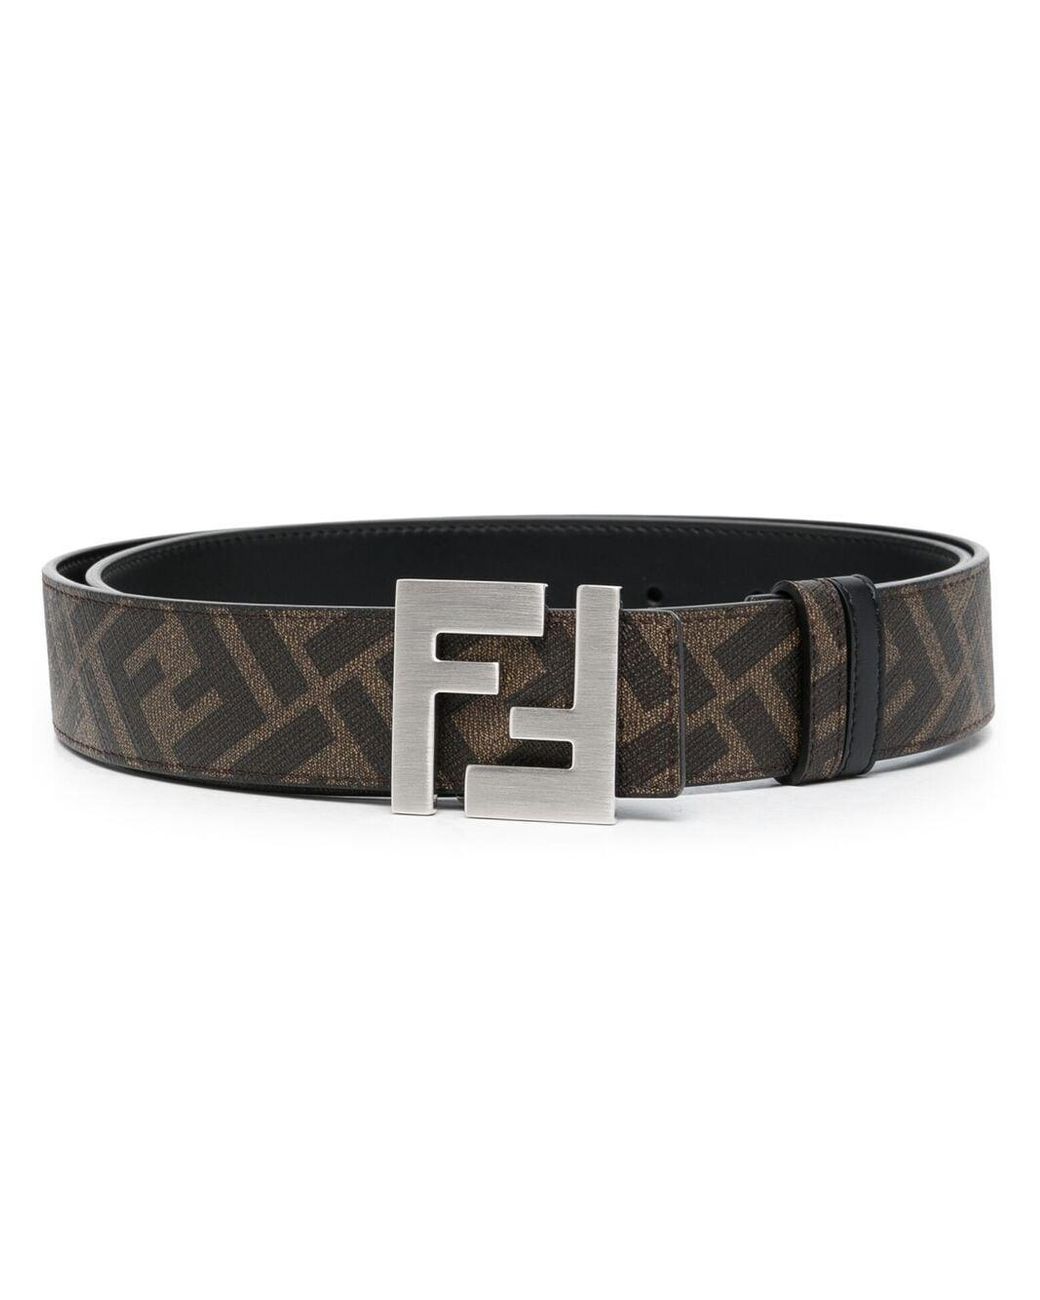 Fendi Leather Reversible Ff-buckle Belt in Brown for Men - Lyst